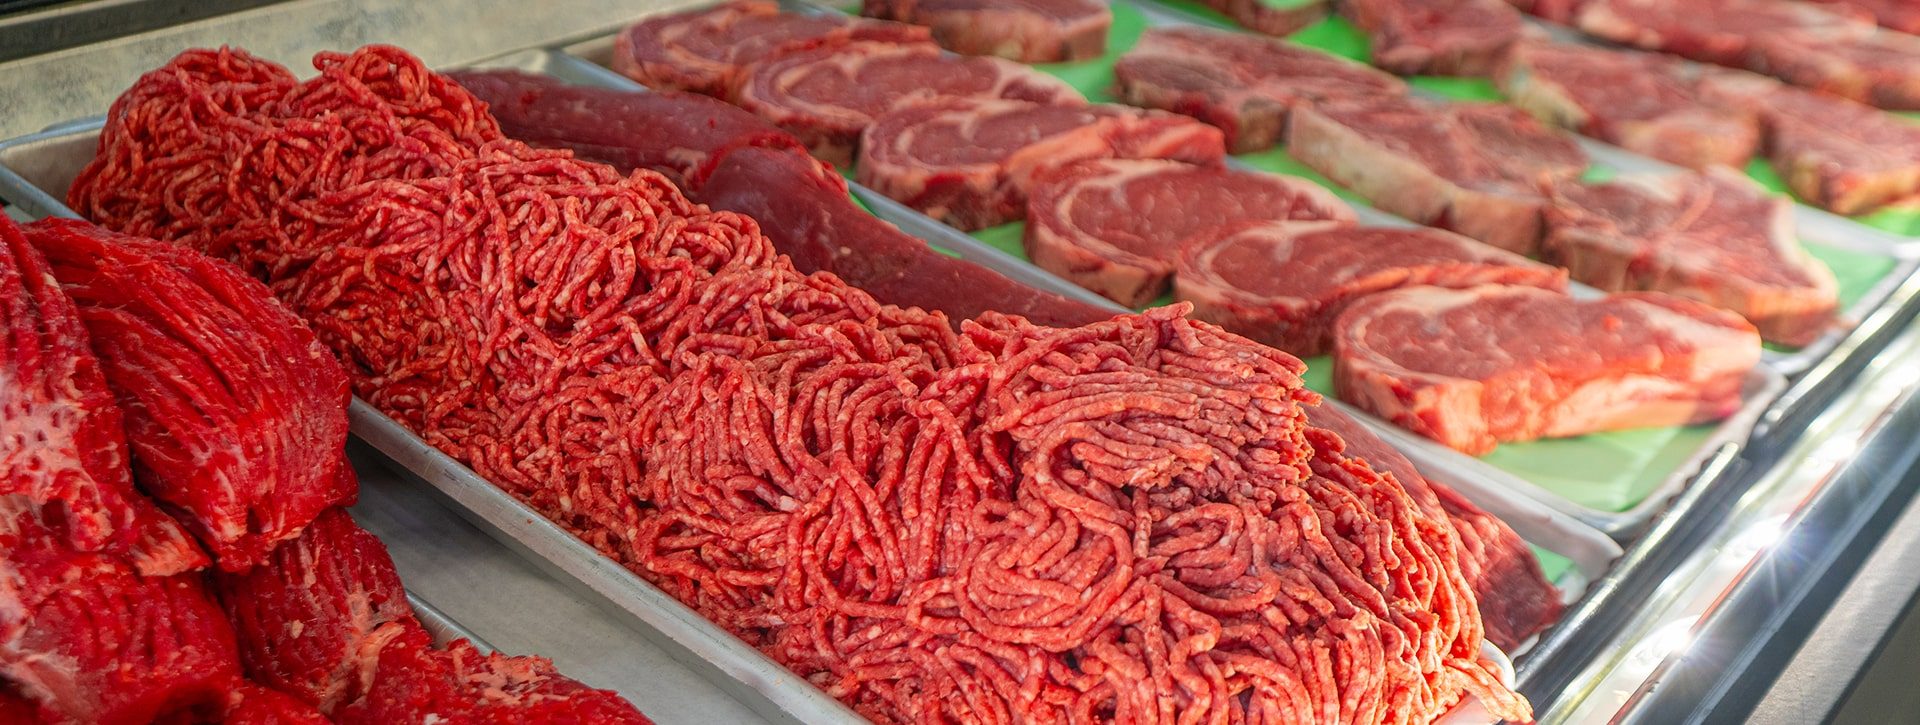 Fresh Cuts of Premium Meats